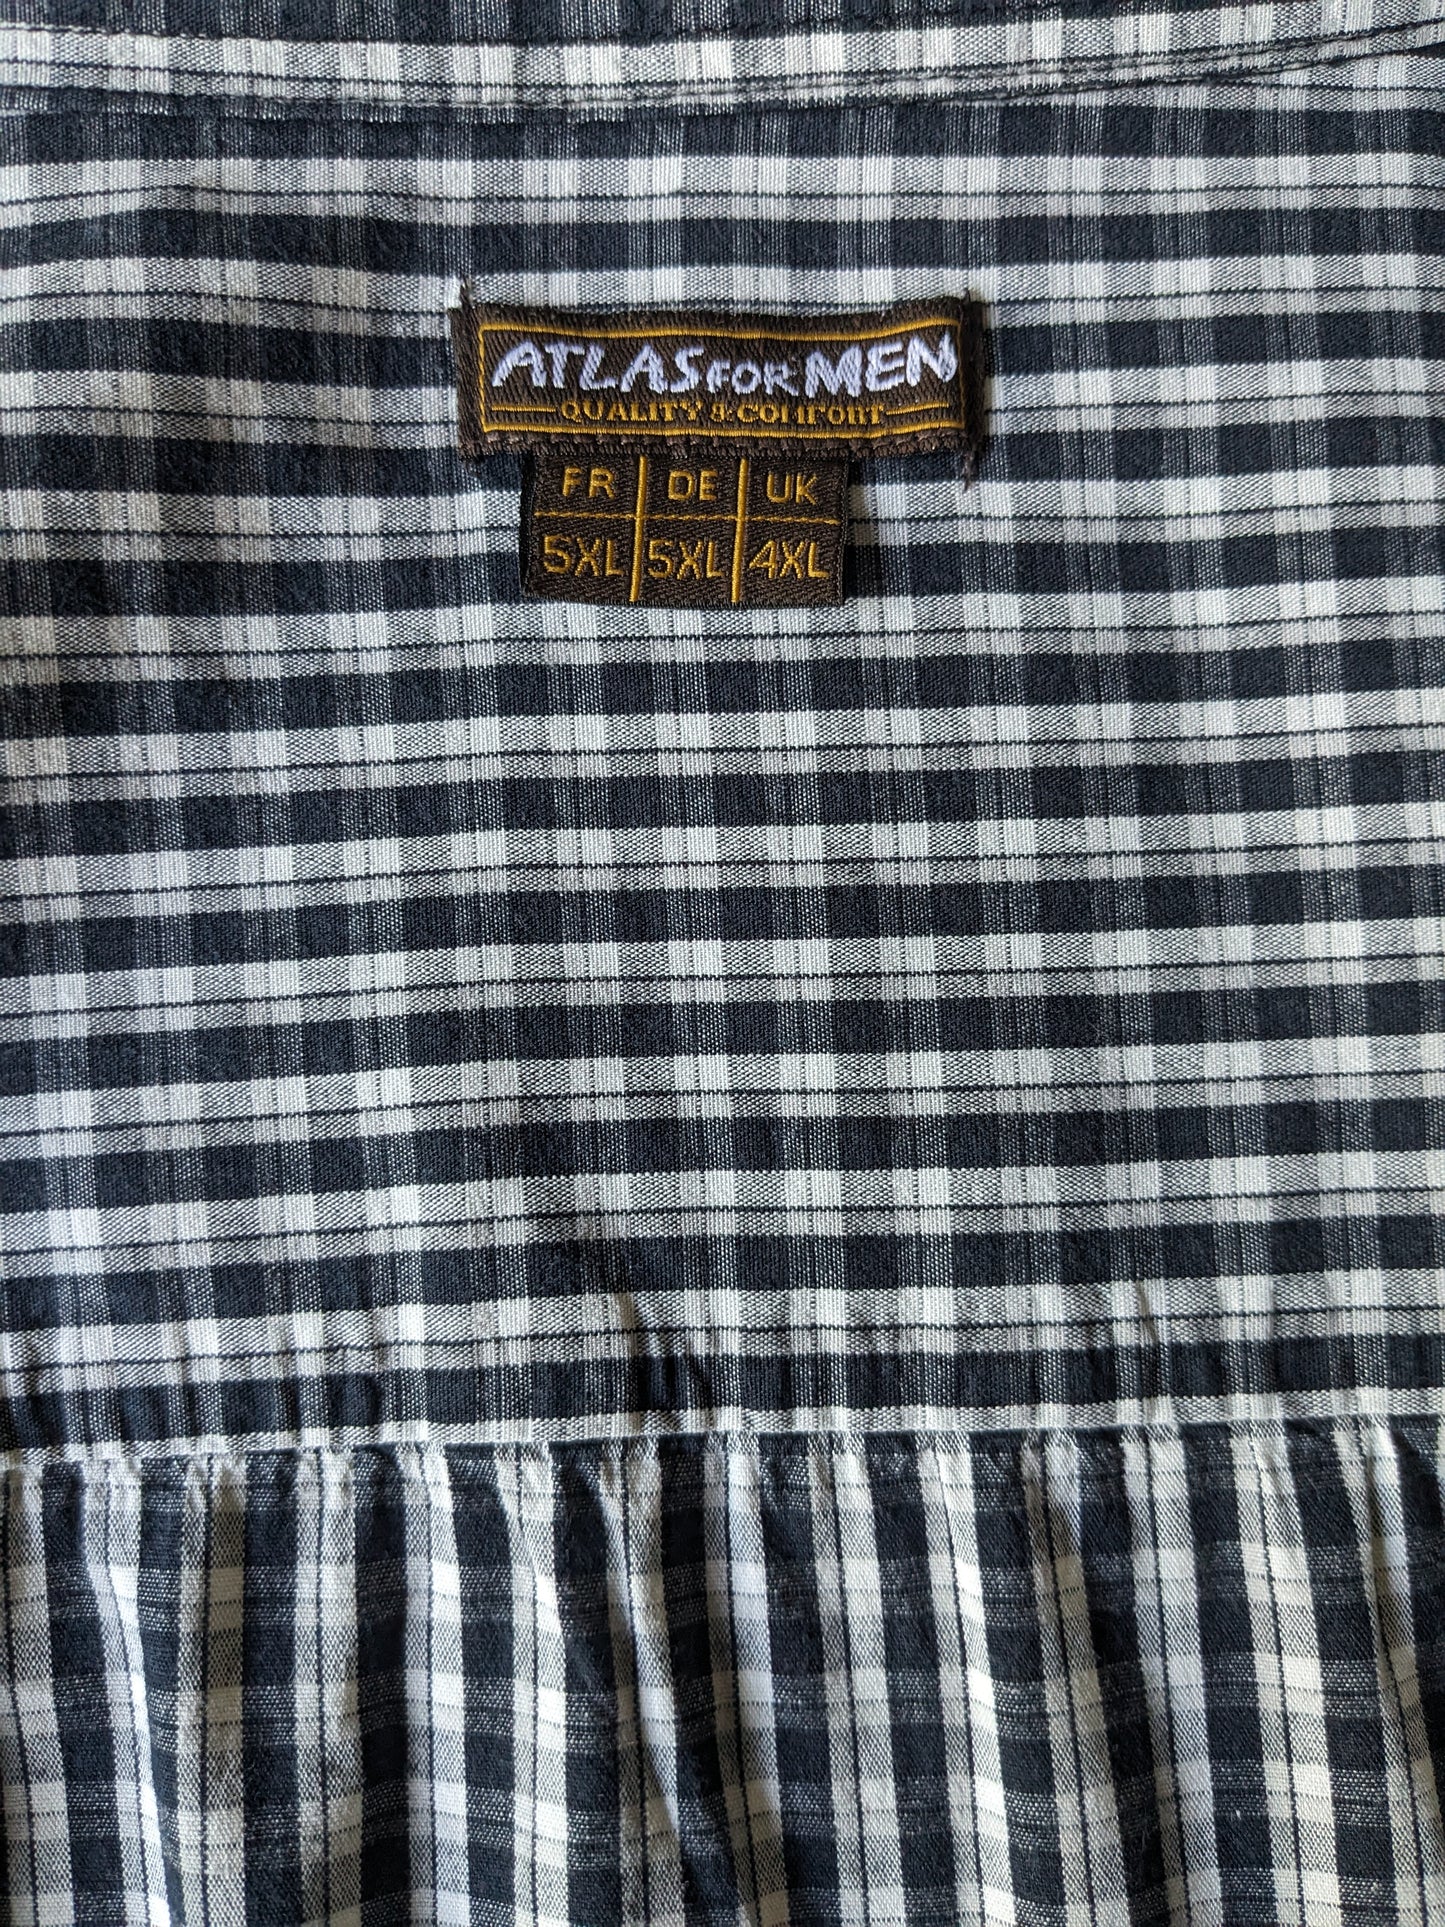 Atlas for Men Shirt. Beige Black controllato. Dimensione 5xl / xxxxxl.